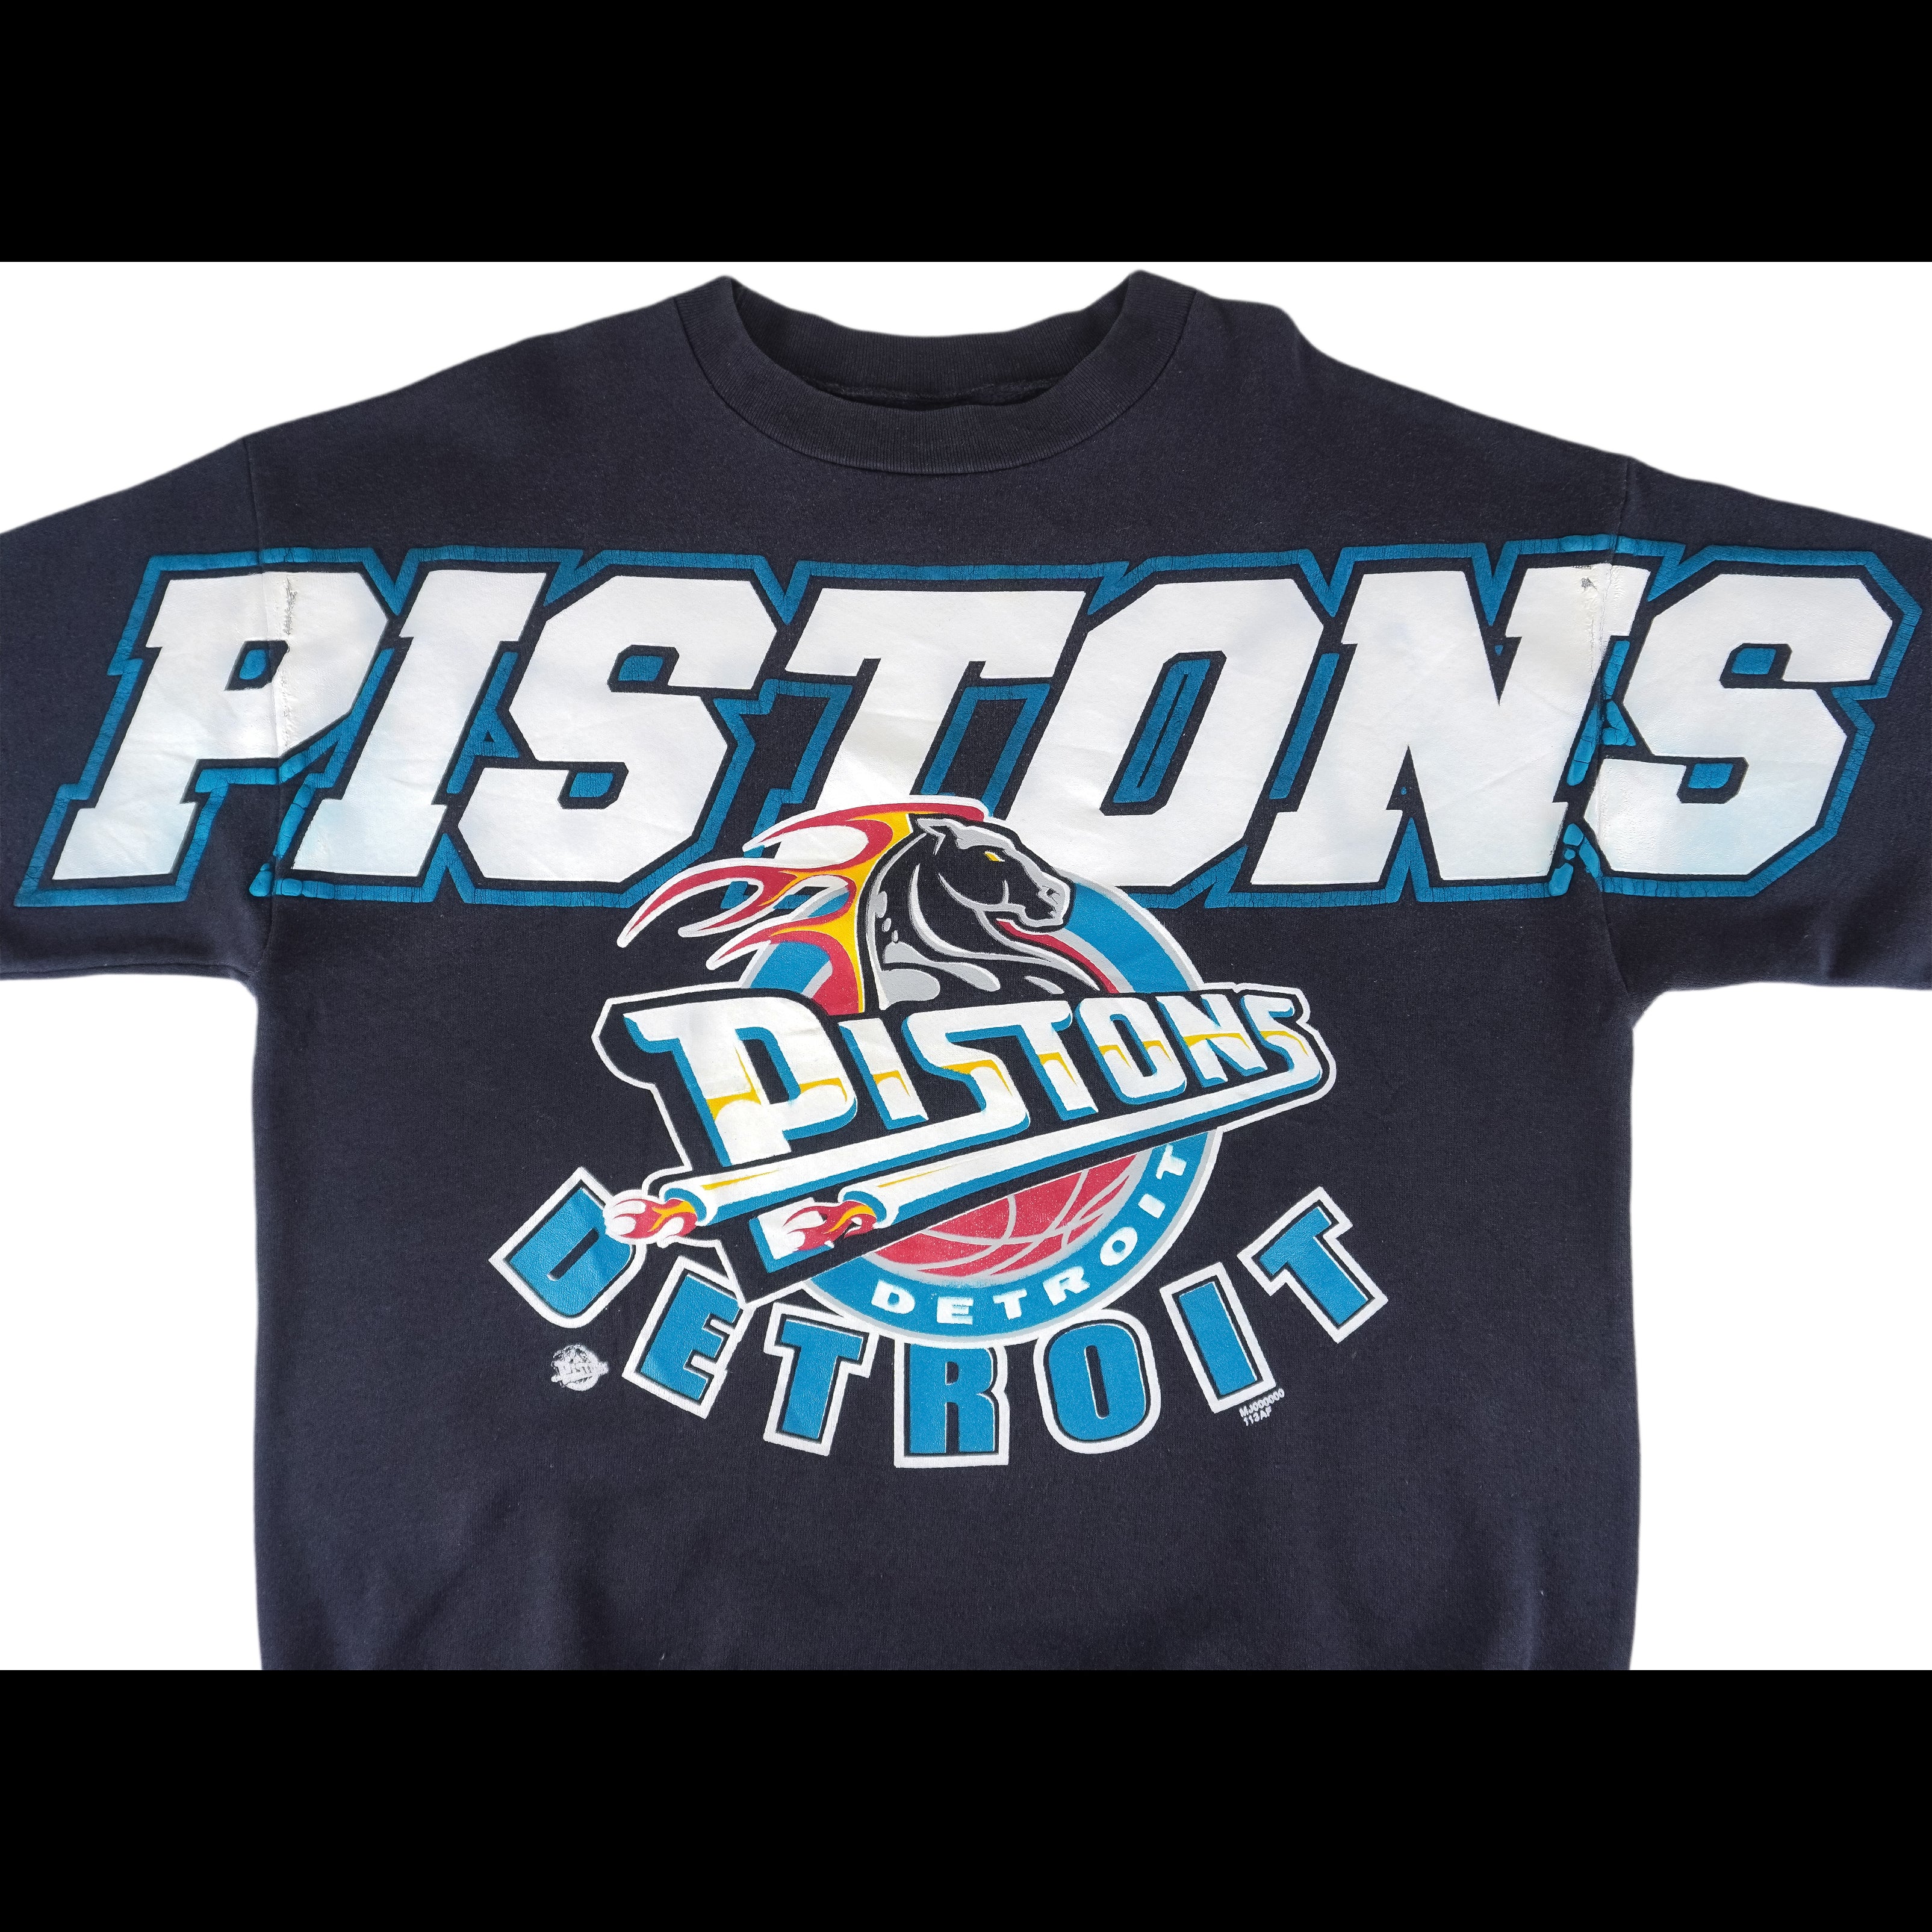 Vintage 80s Detroit Pistons Champion T-Shirt Large Deadstock NBA